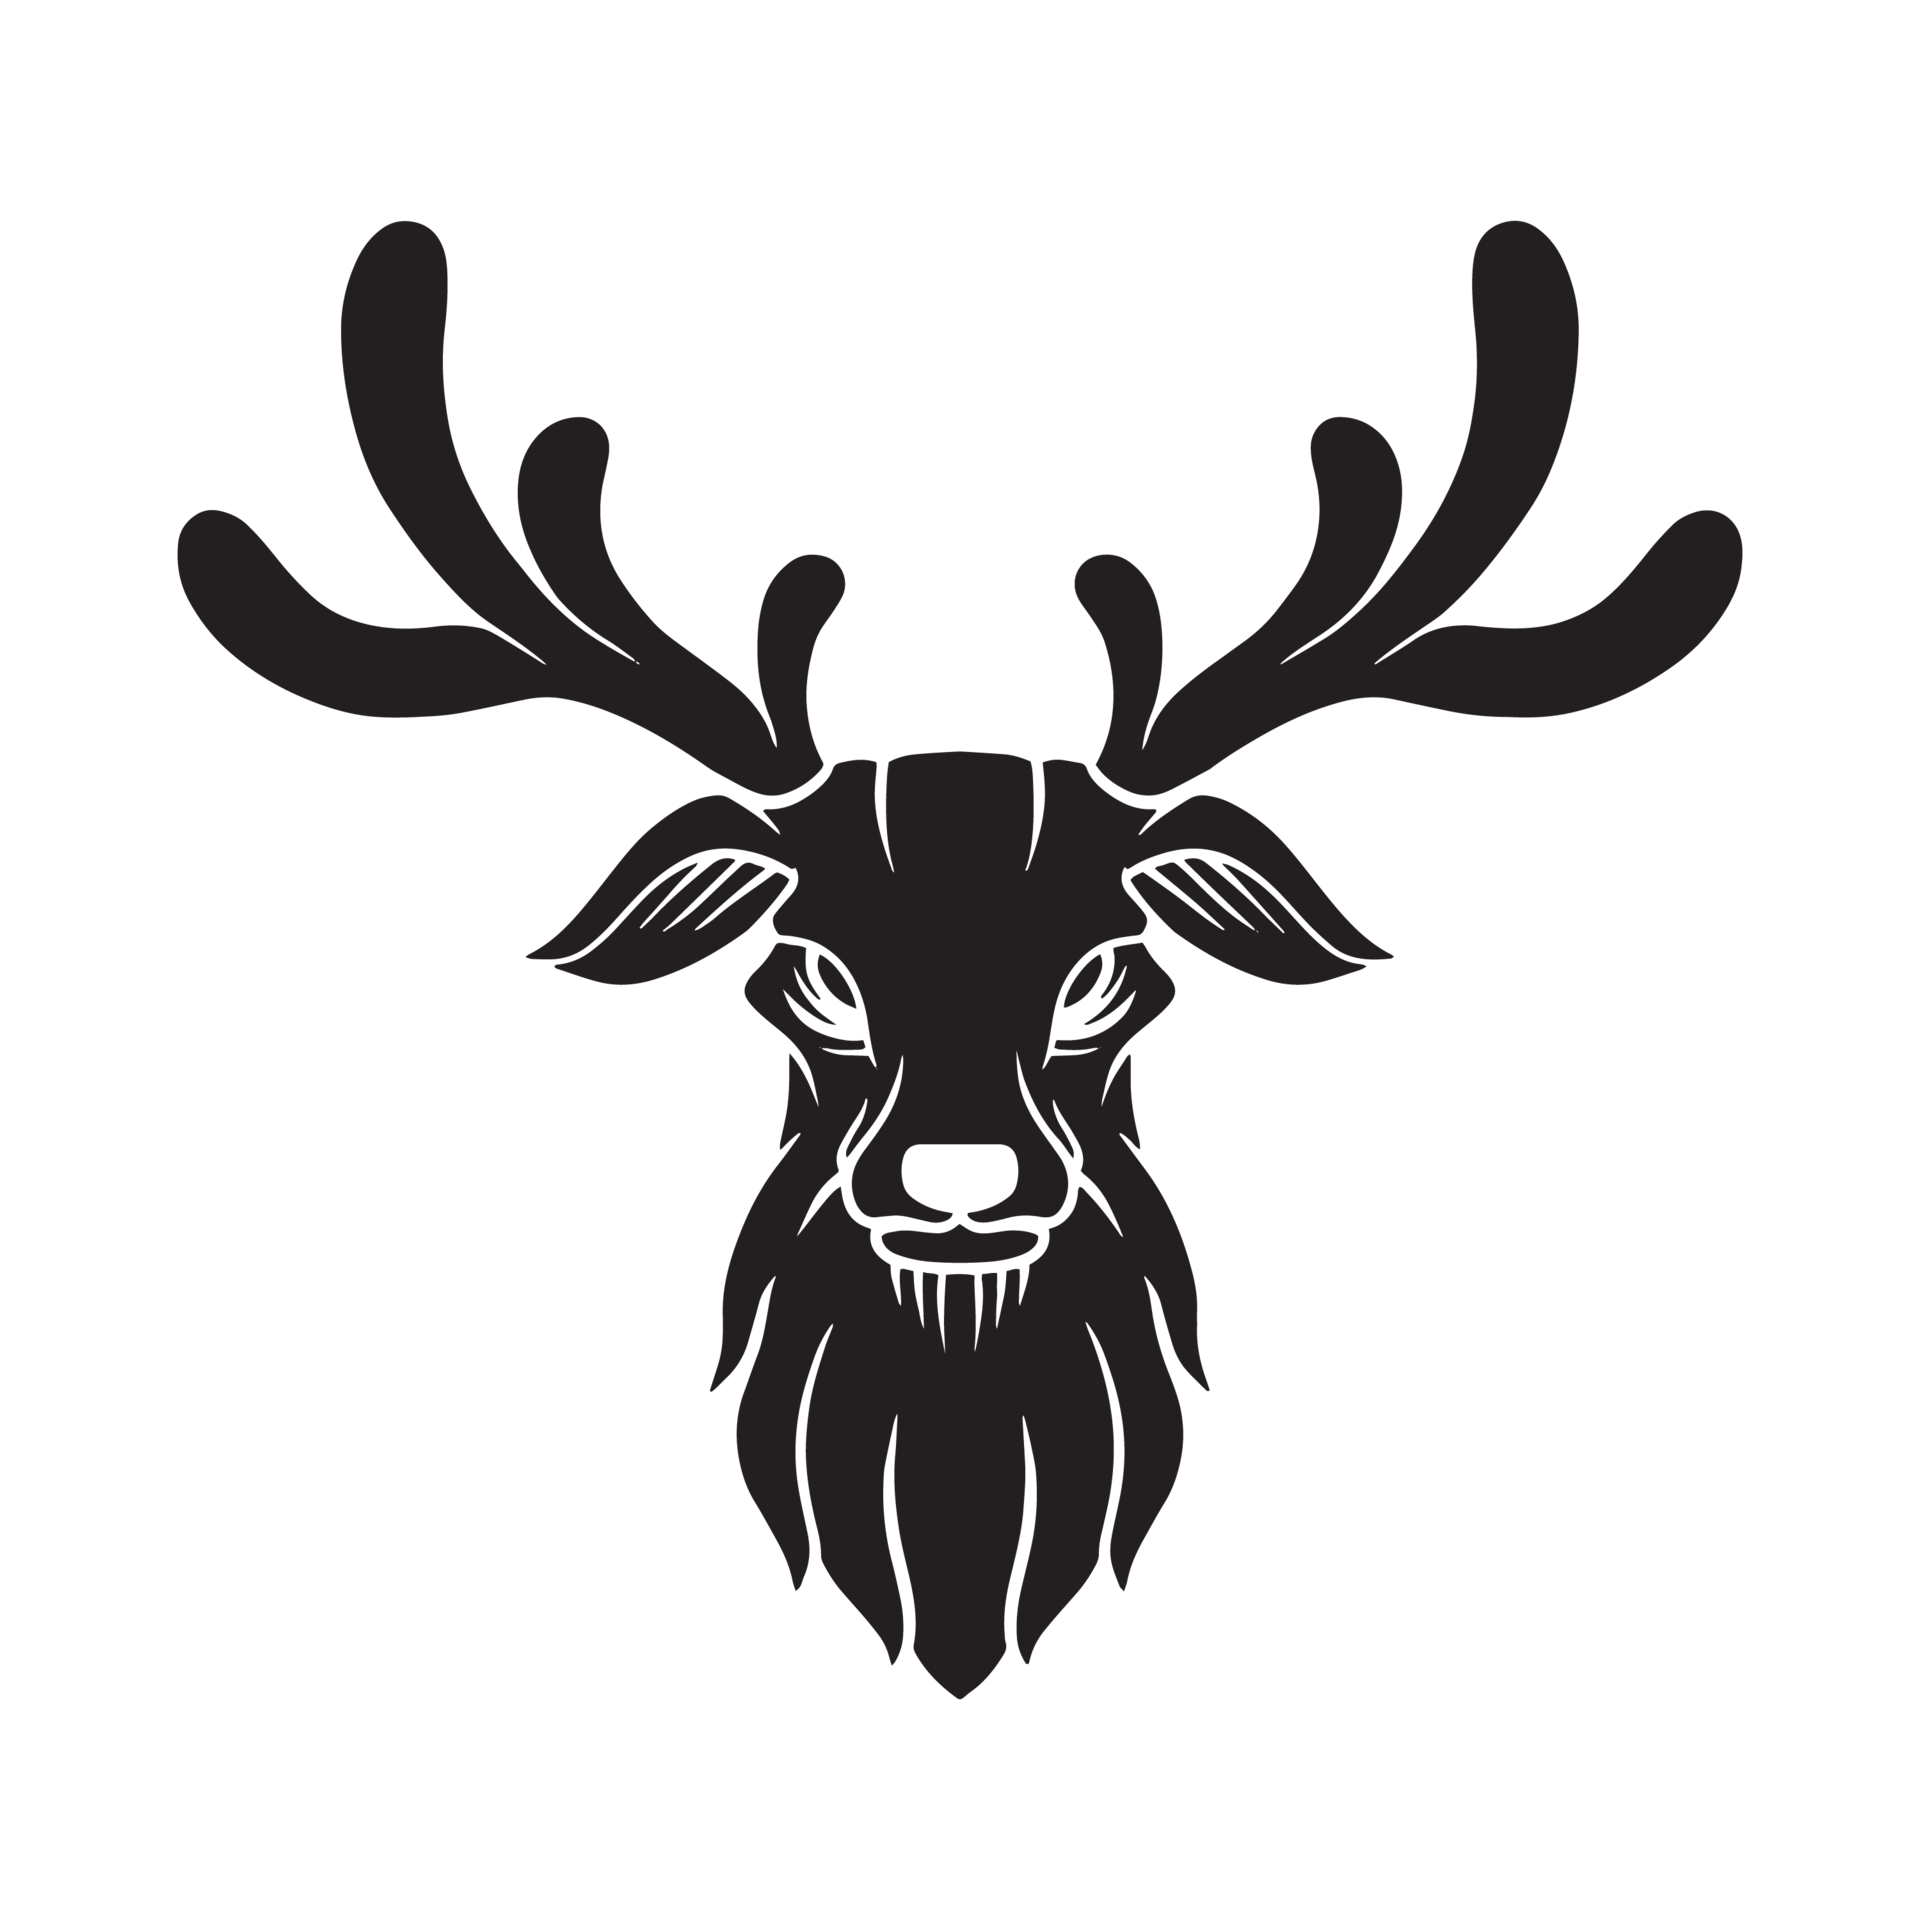 File:Deer-Logo.png - Wikimedia Commons